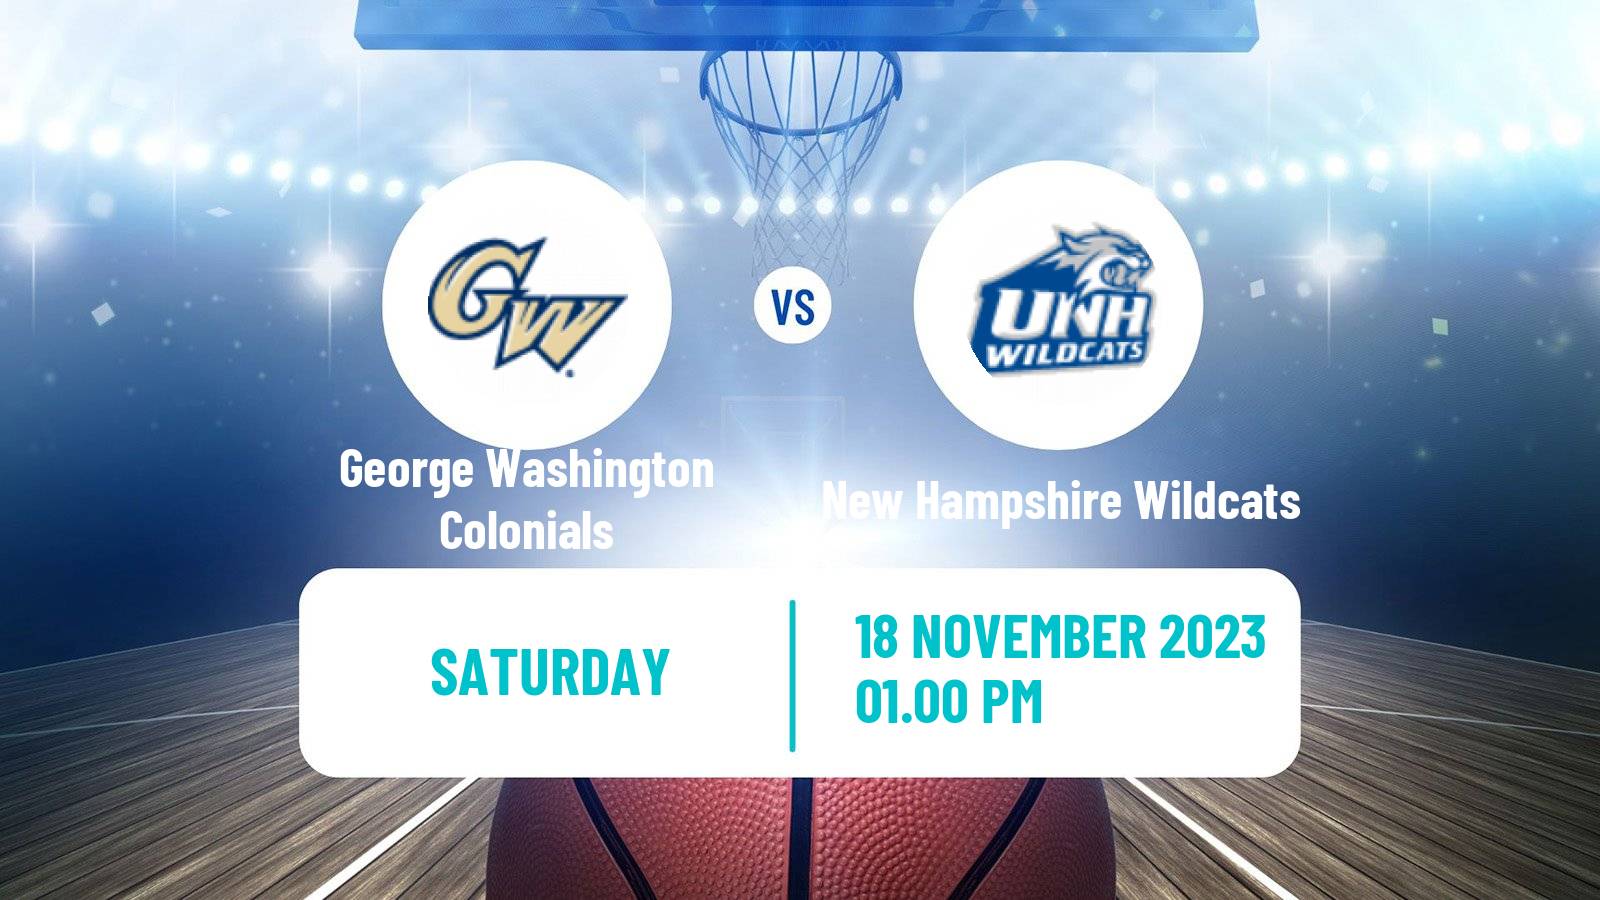 Basketball NCAA College Basketball George Washington Colonials - New Hampshire Wildcats